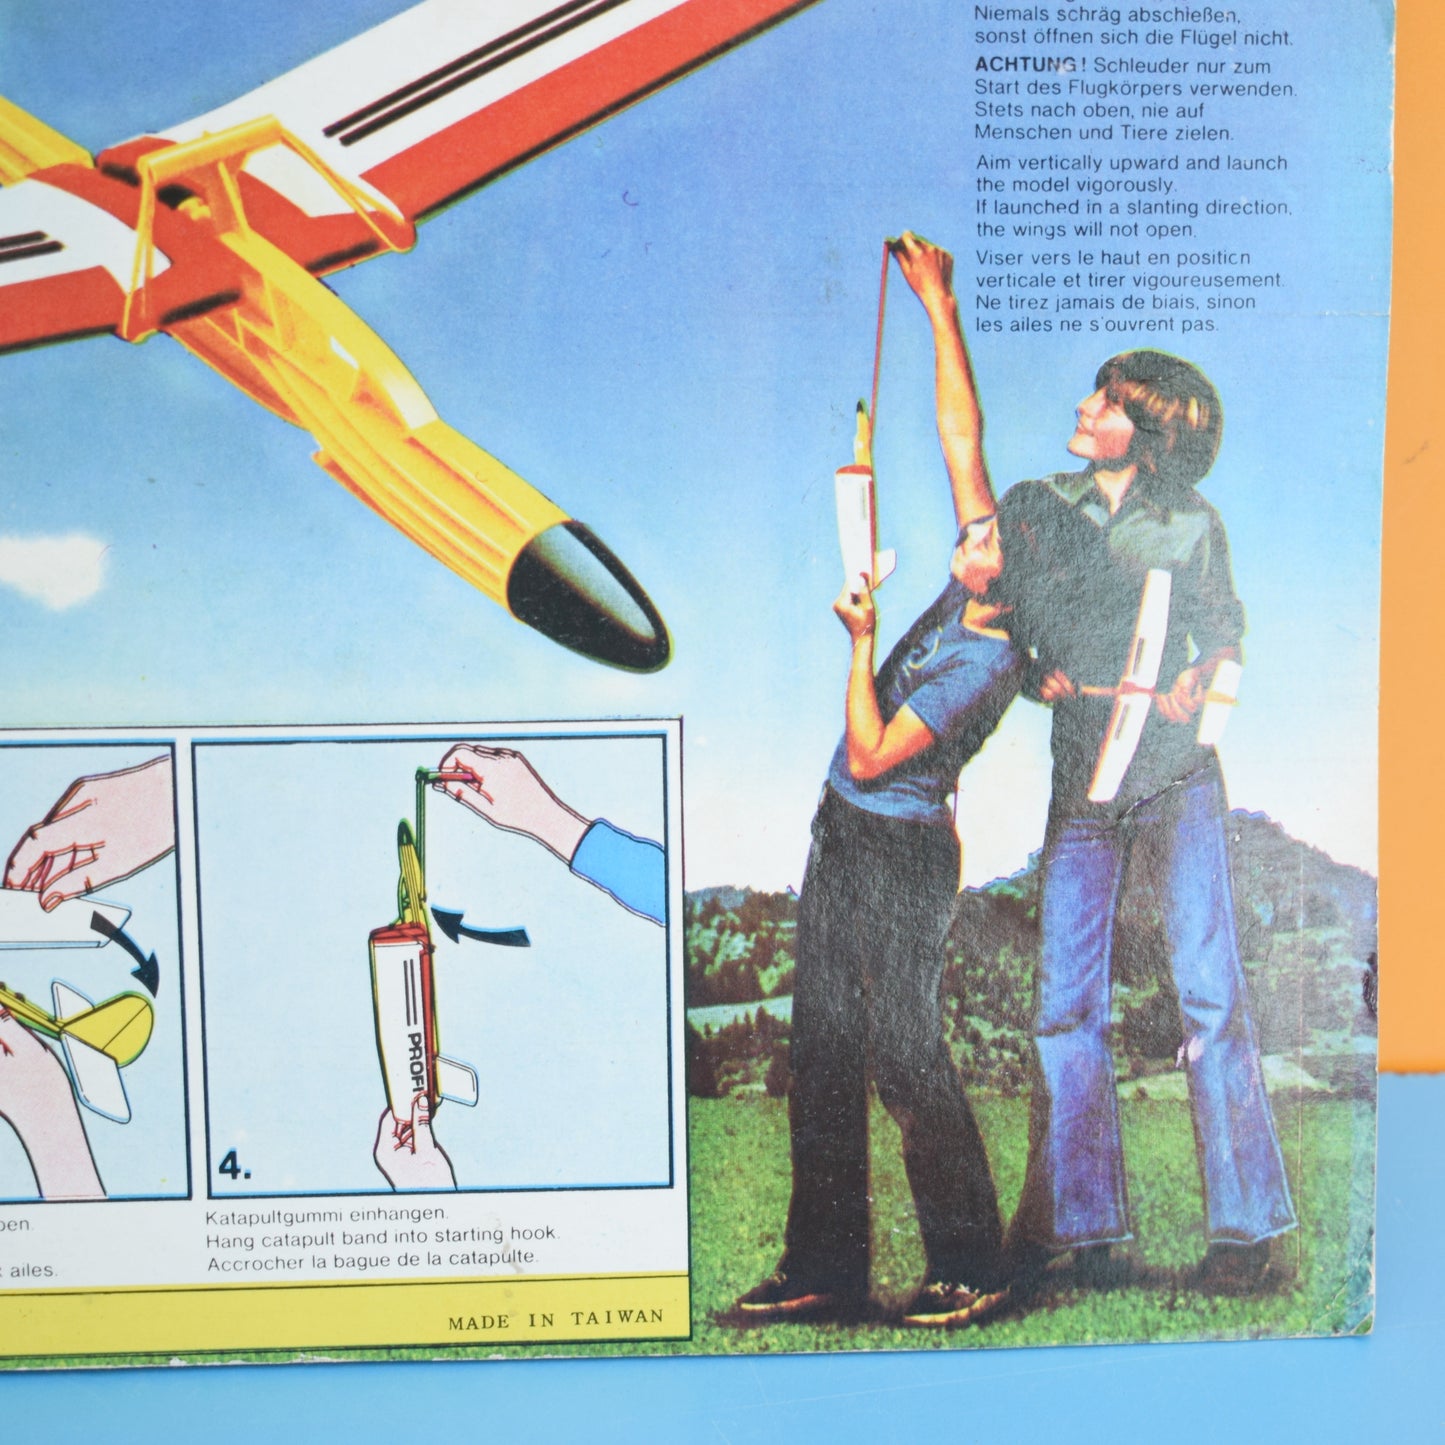 Vintage 1970s Catapult Glider Plane Toy